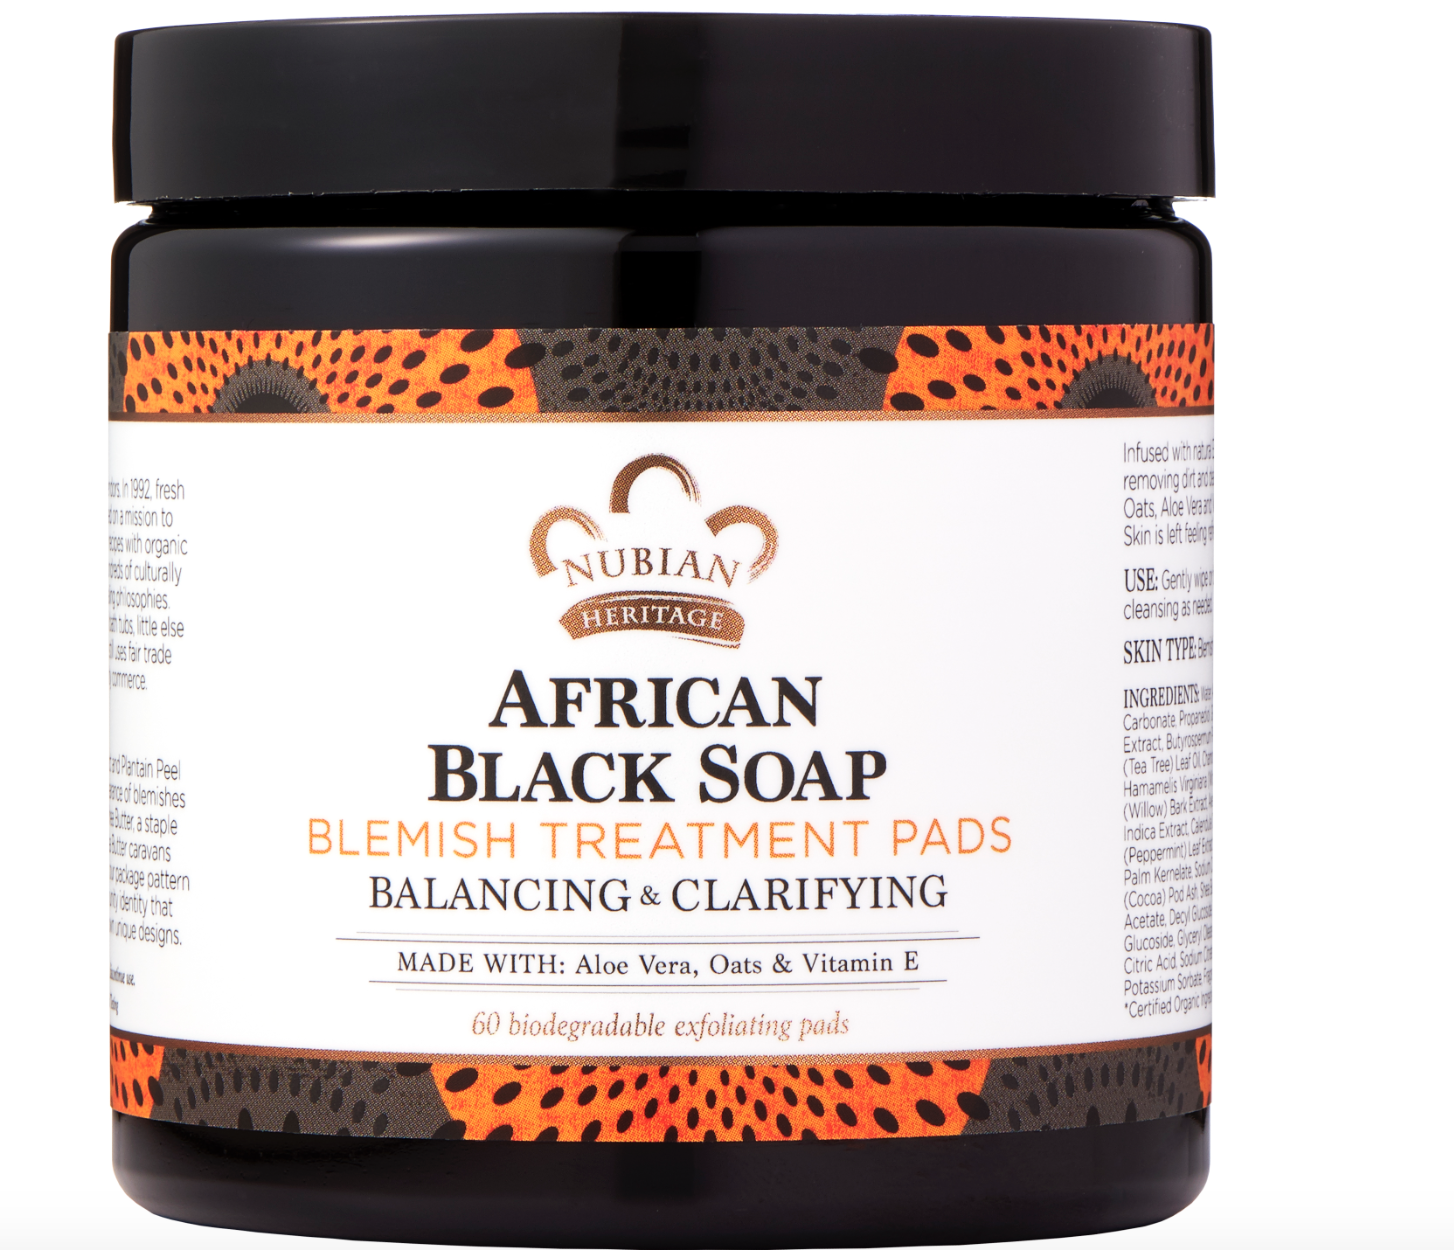 Nubian Heritage African Black Soap Blemish Treatment Pads